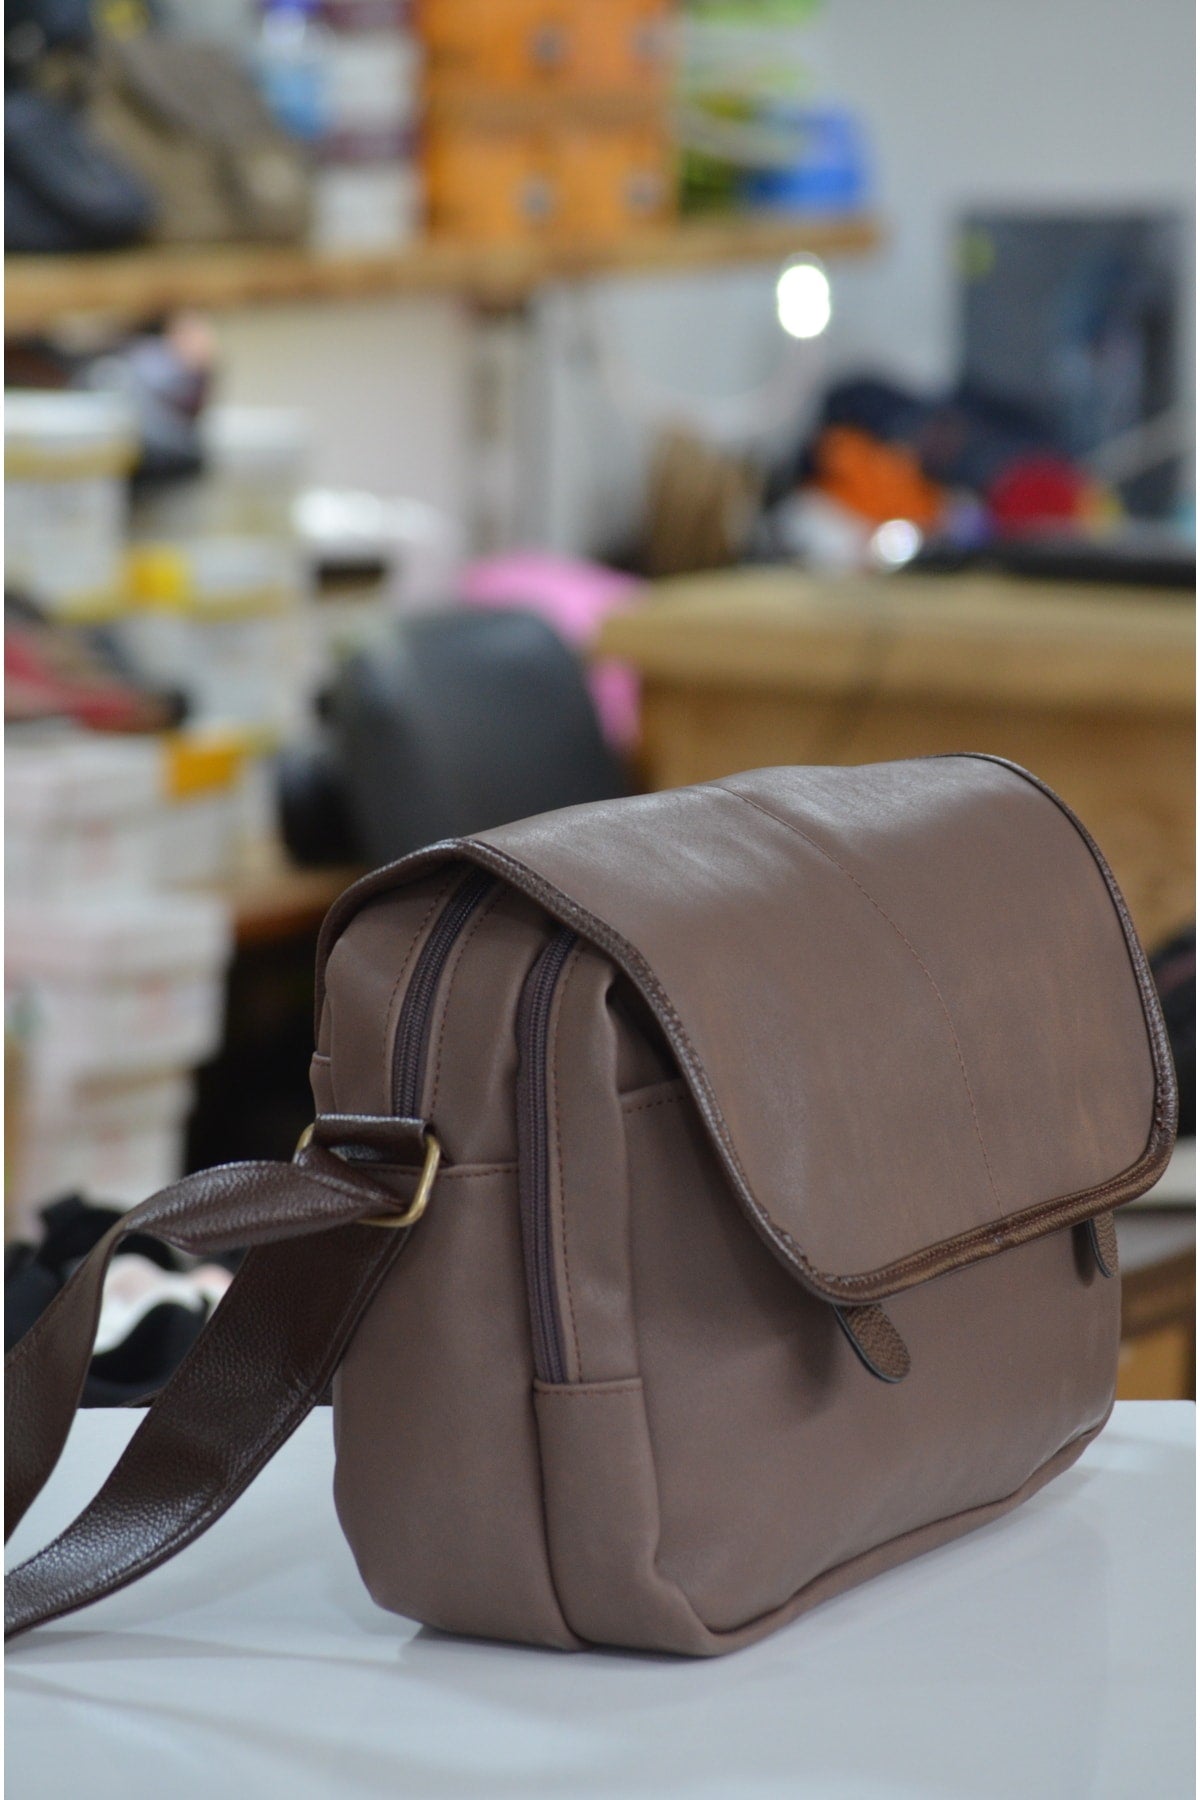 Handy Unisex Light Brown Messenger Bag, Briefcase, Travel Bag with Zipper Lid